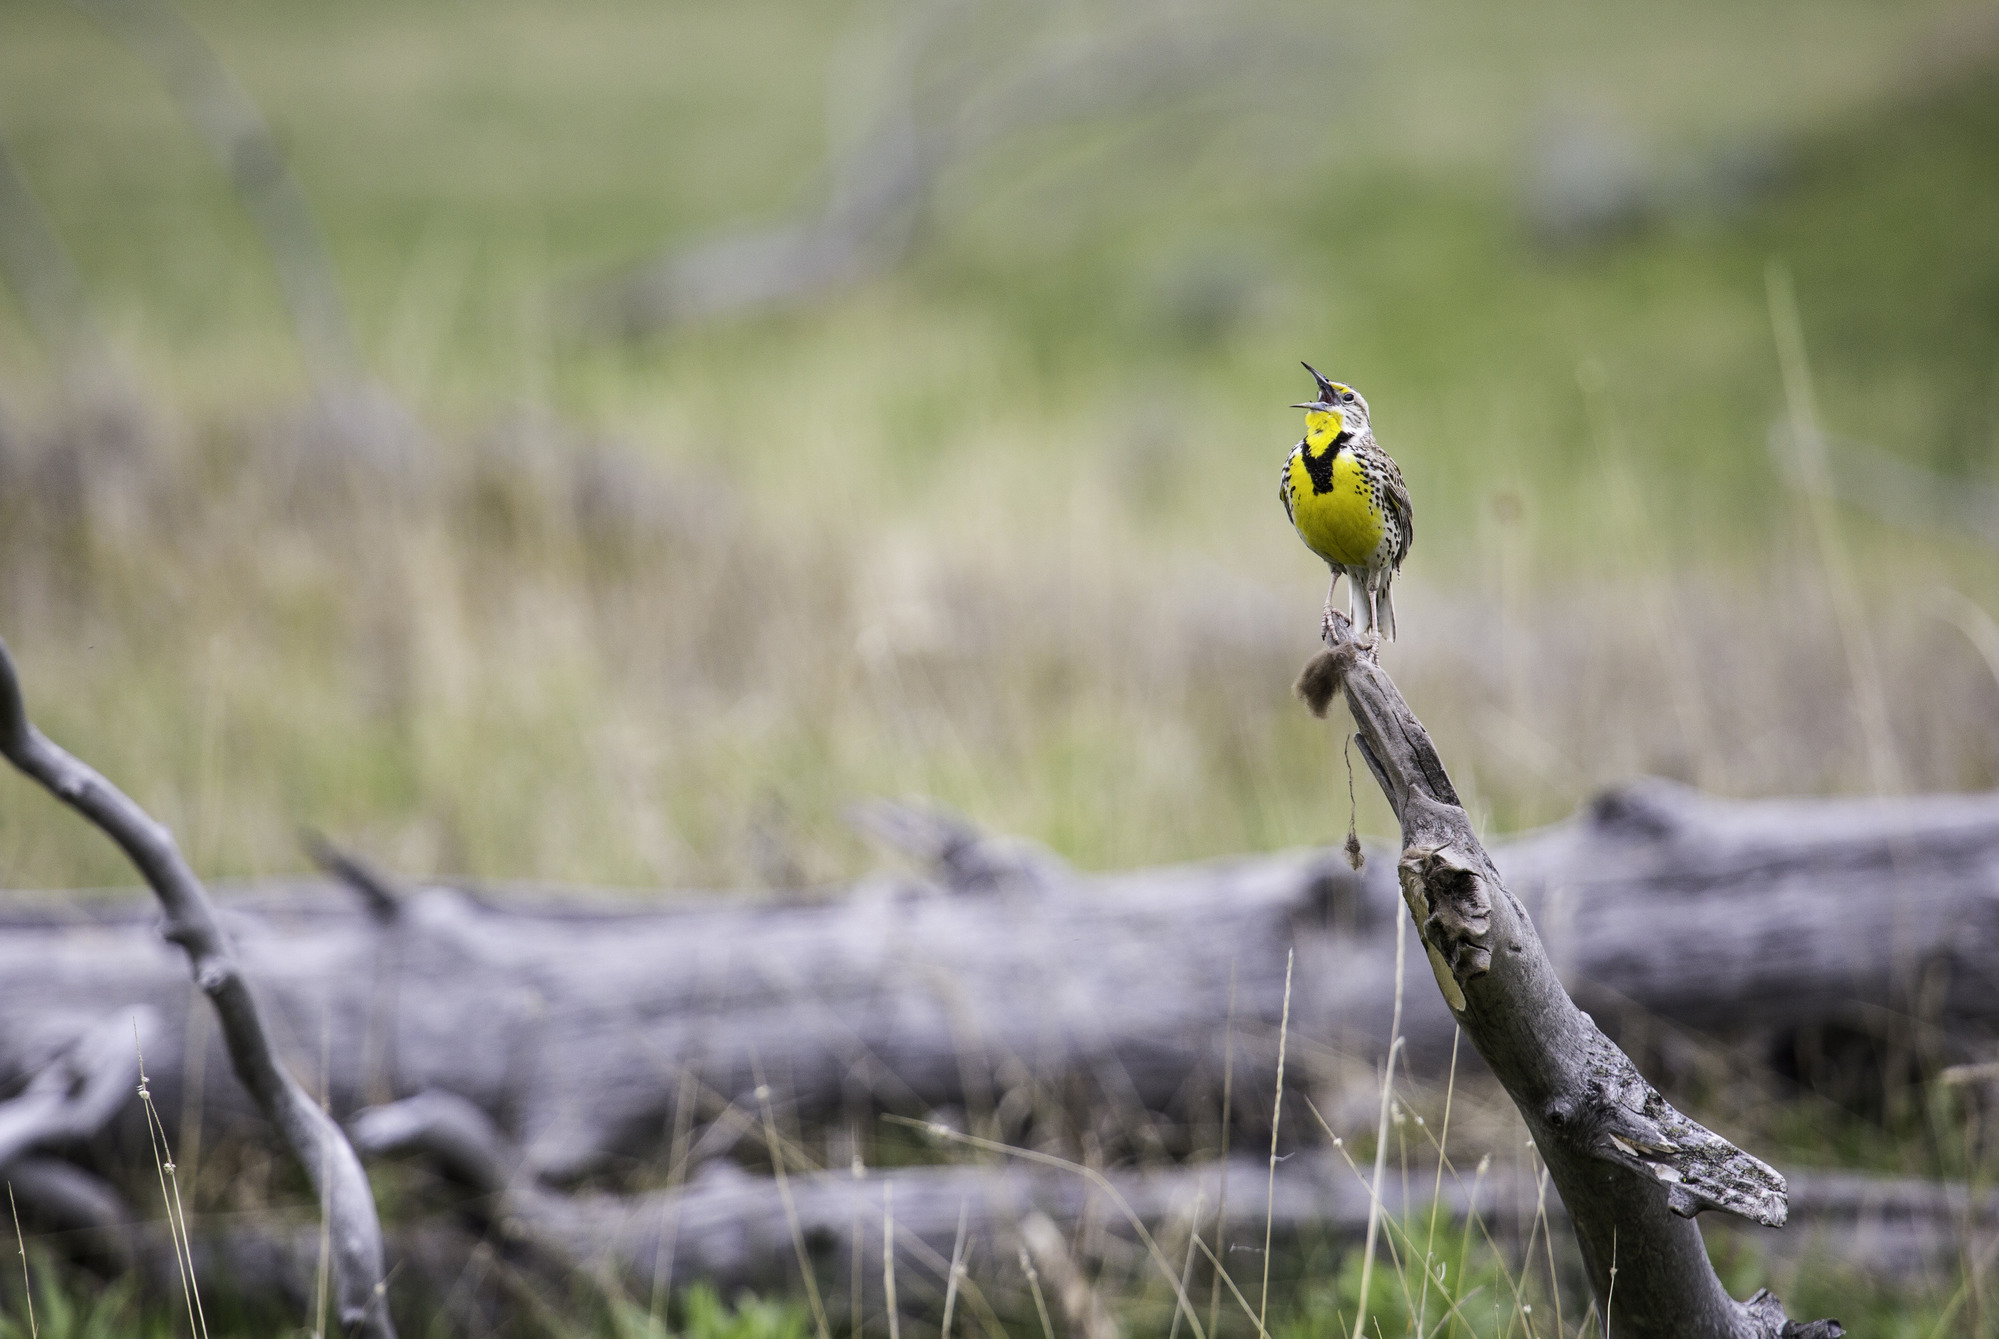 Western meadowlark singing from on top of a fallen tree branch